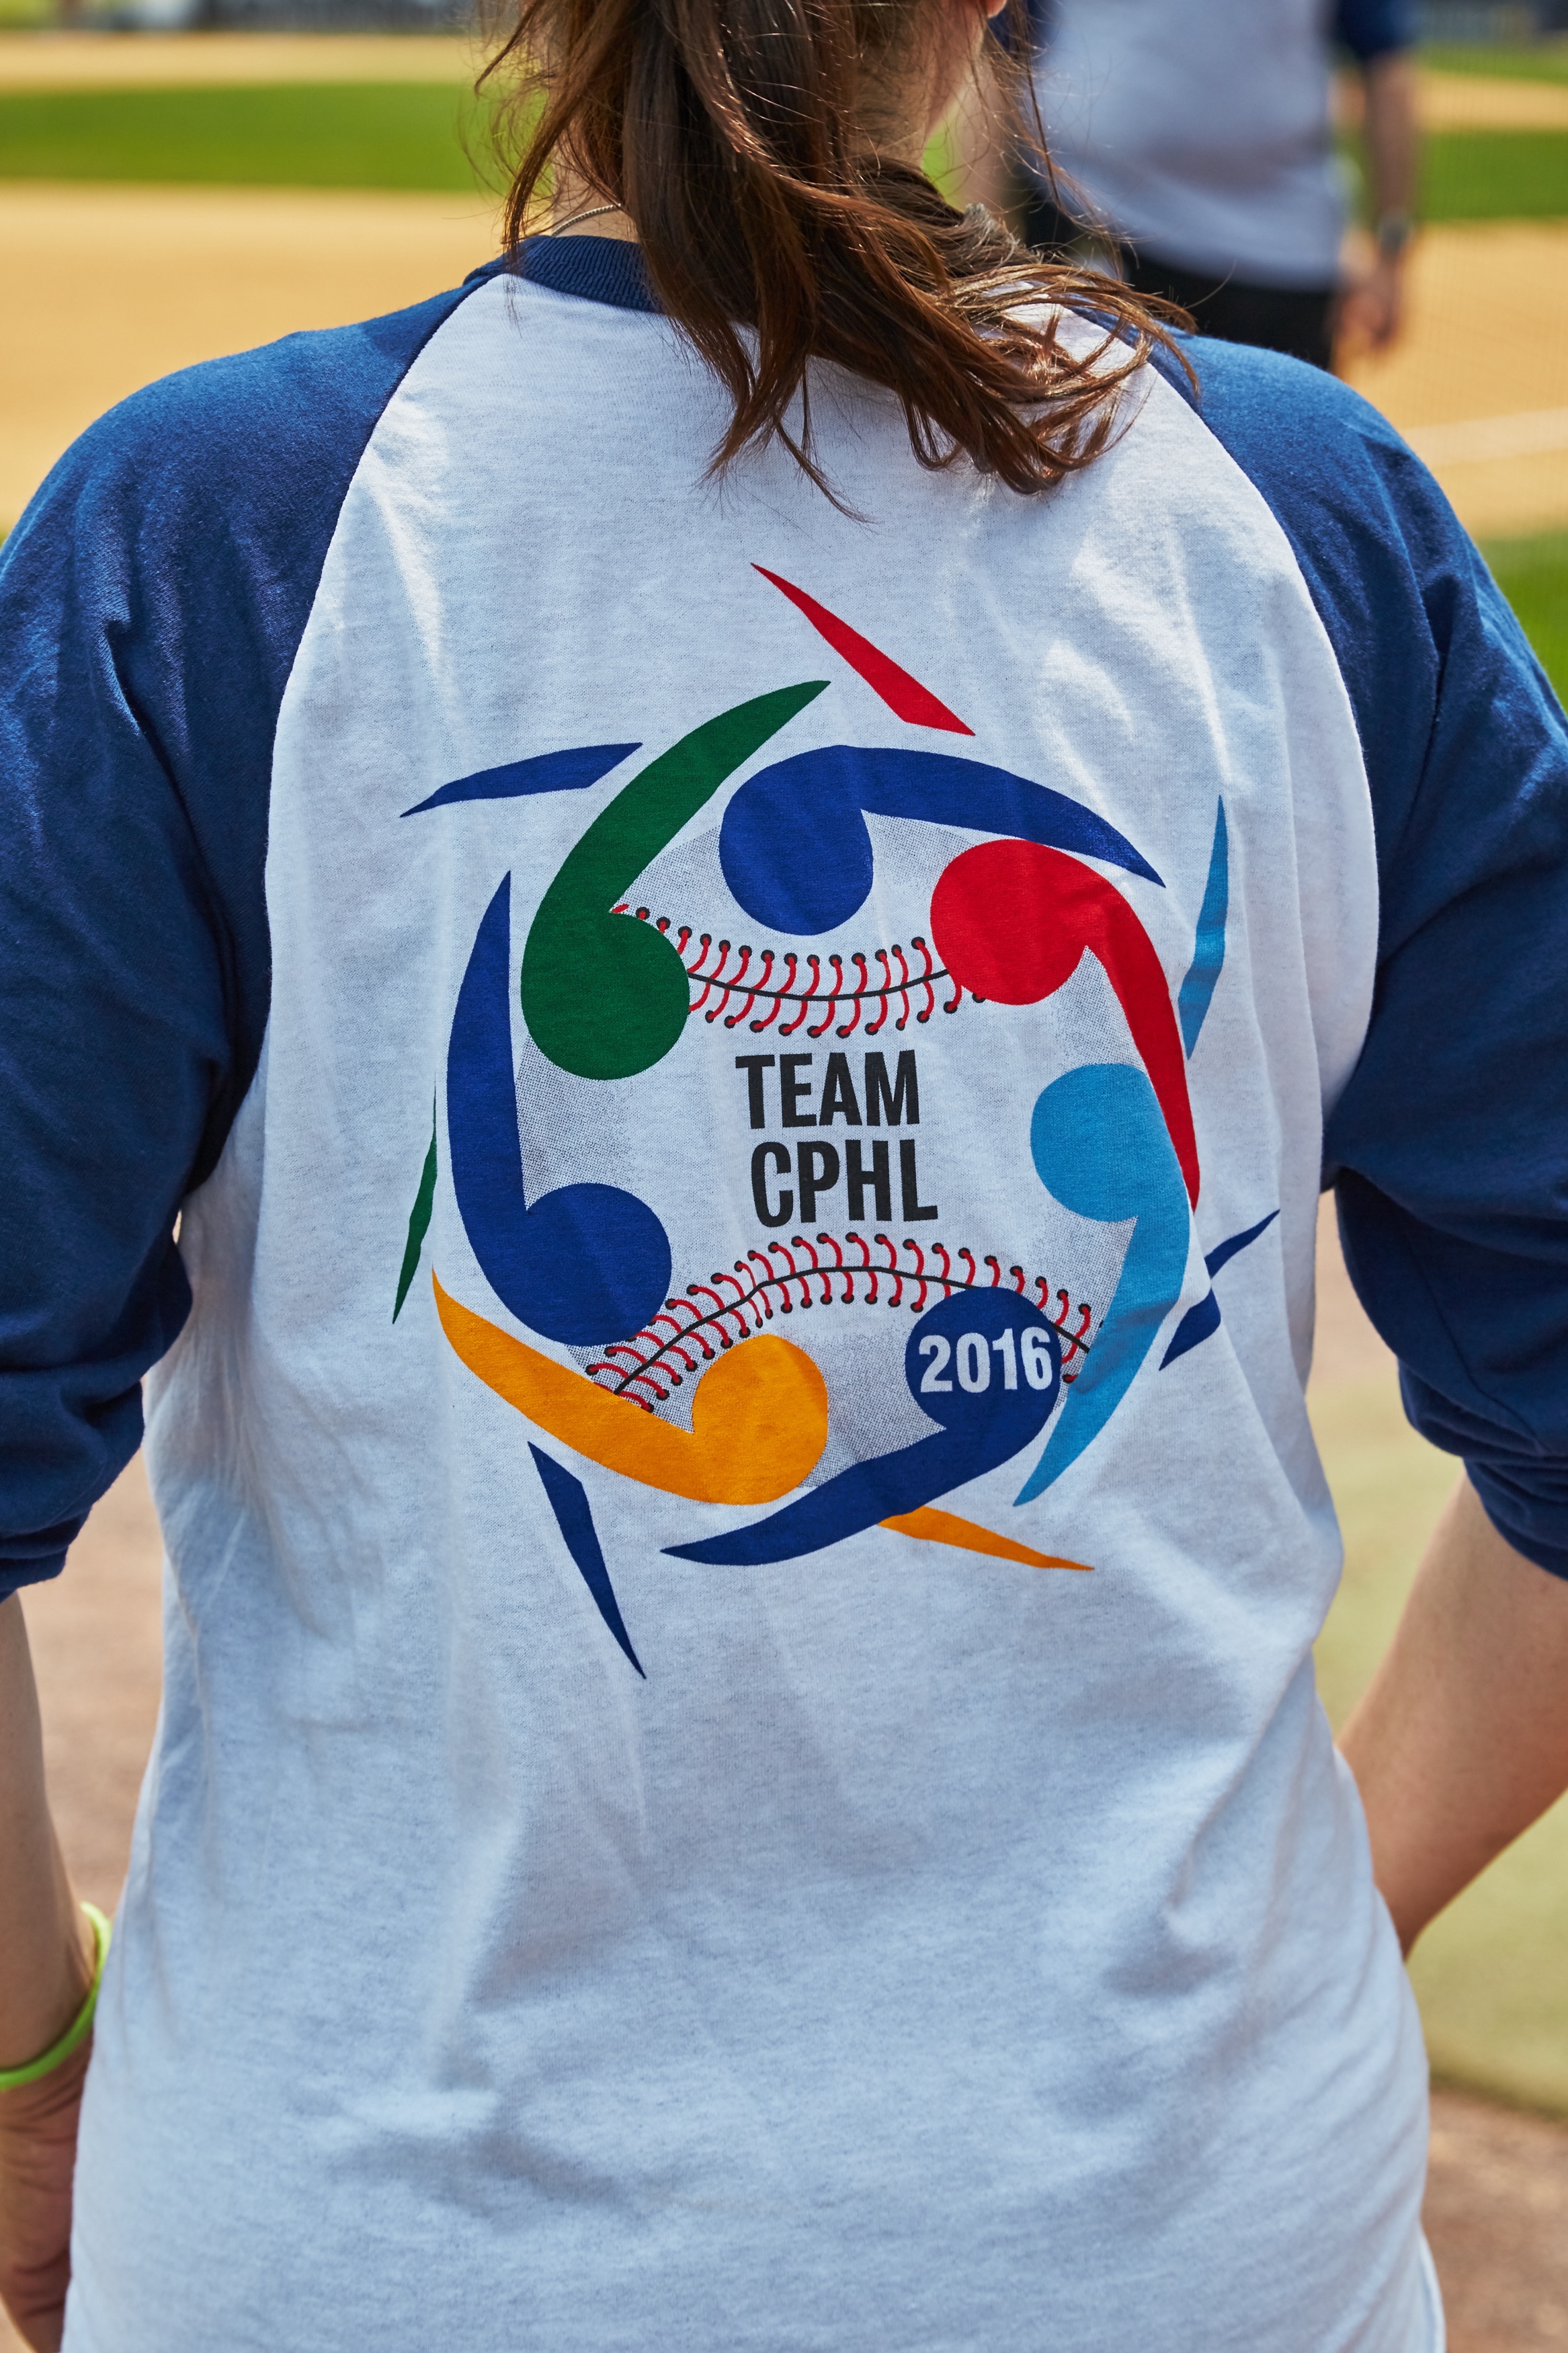 CPHL Softball Event